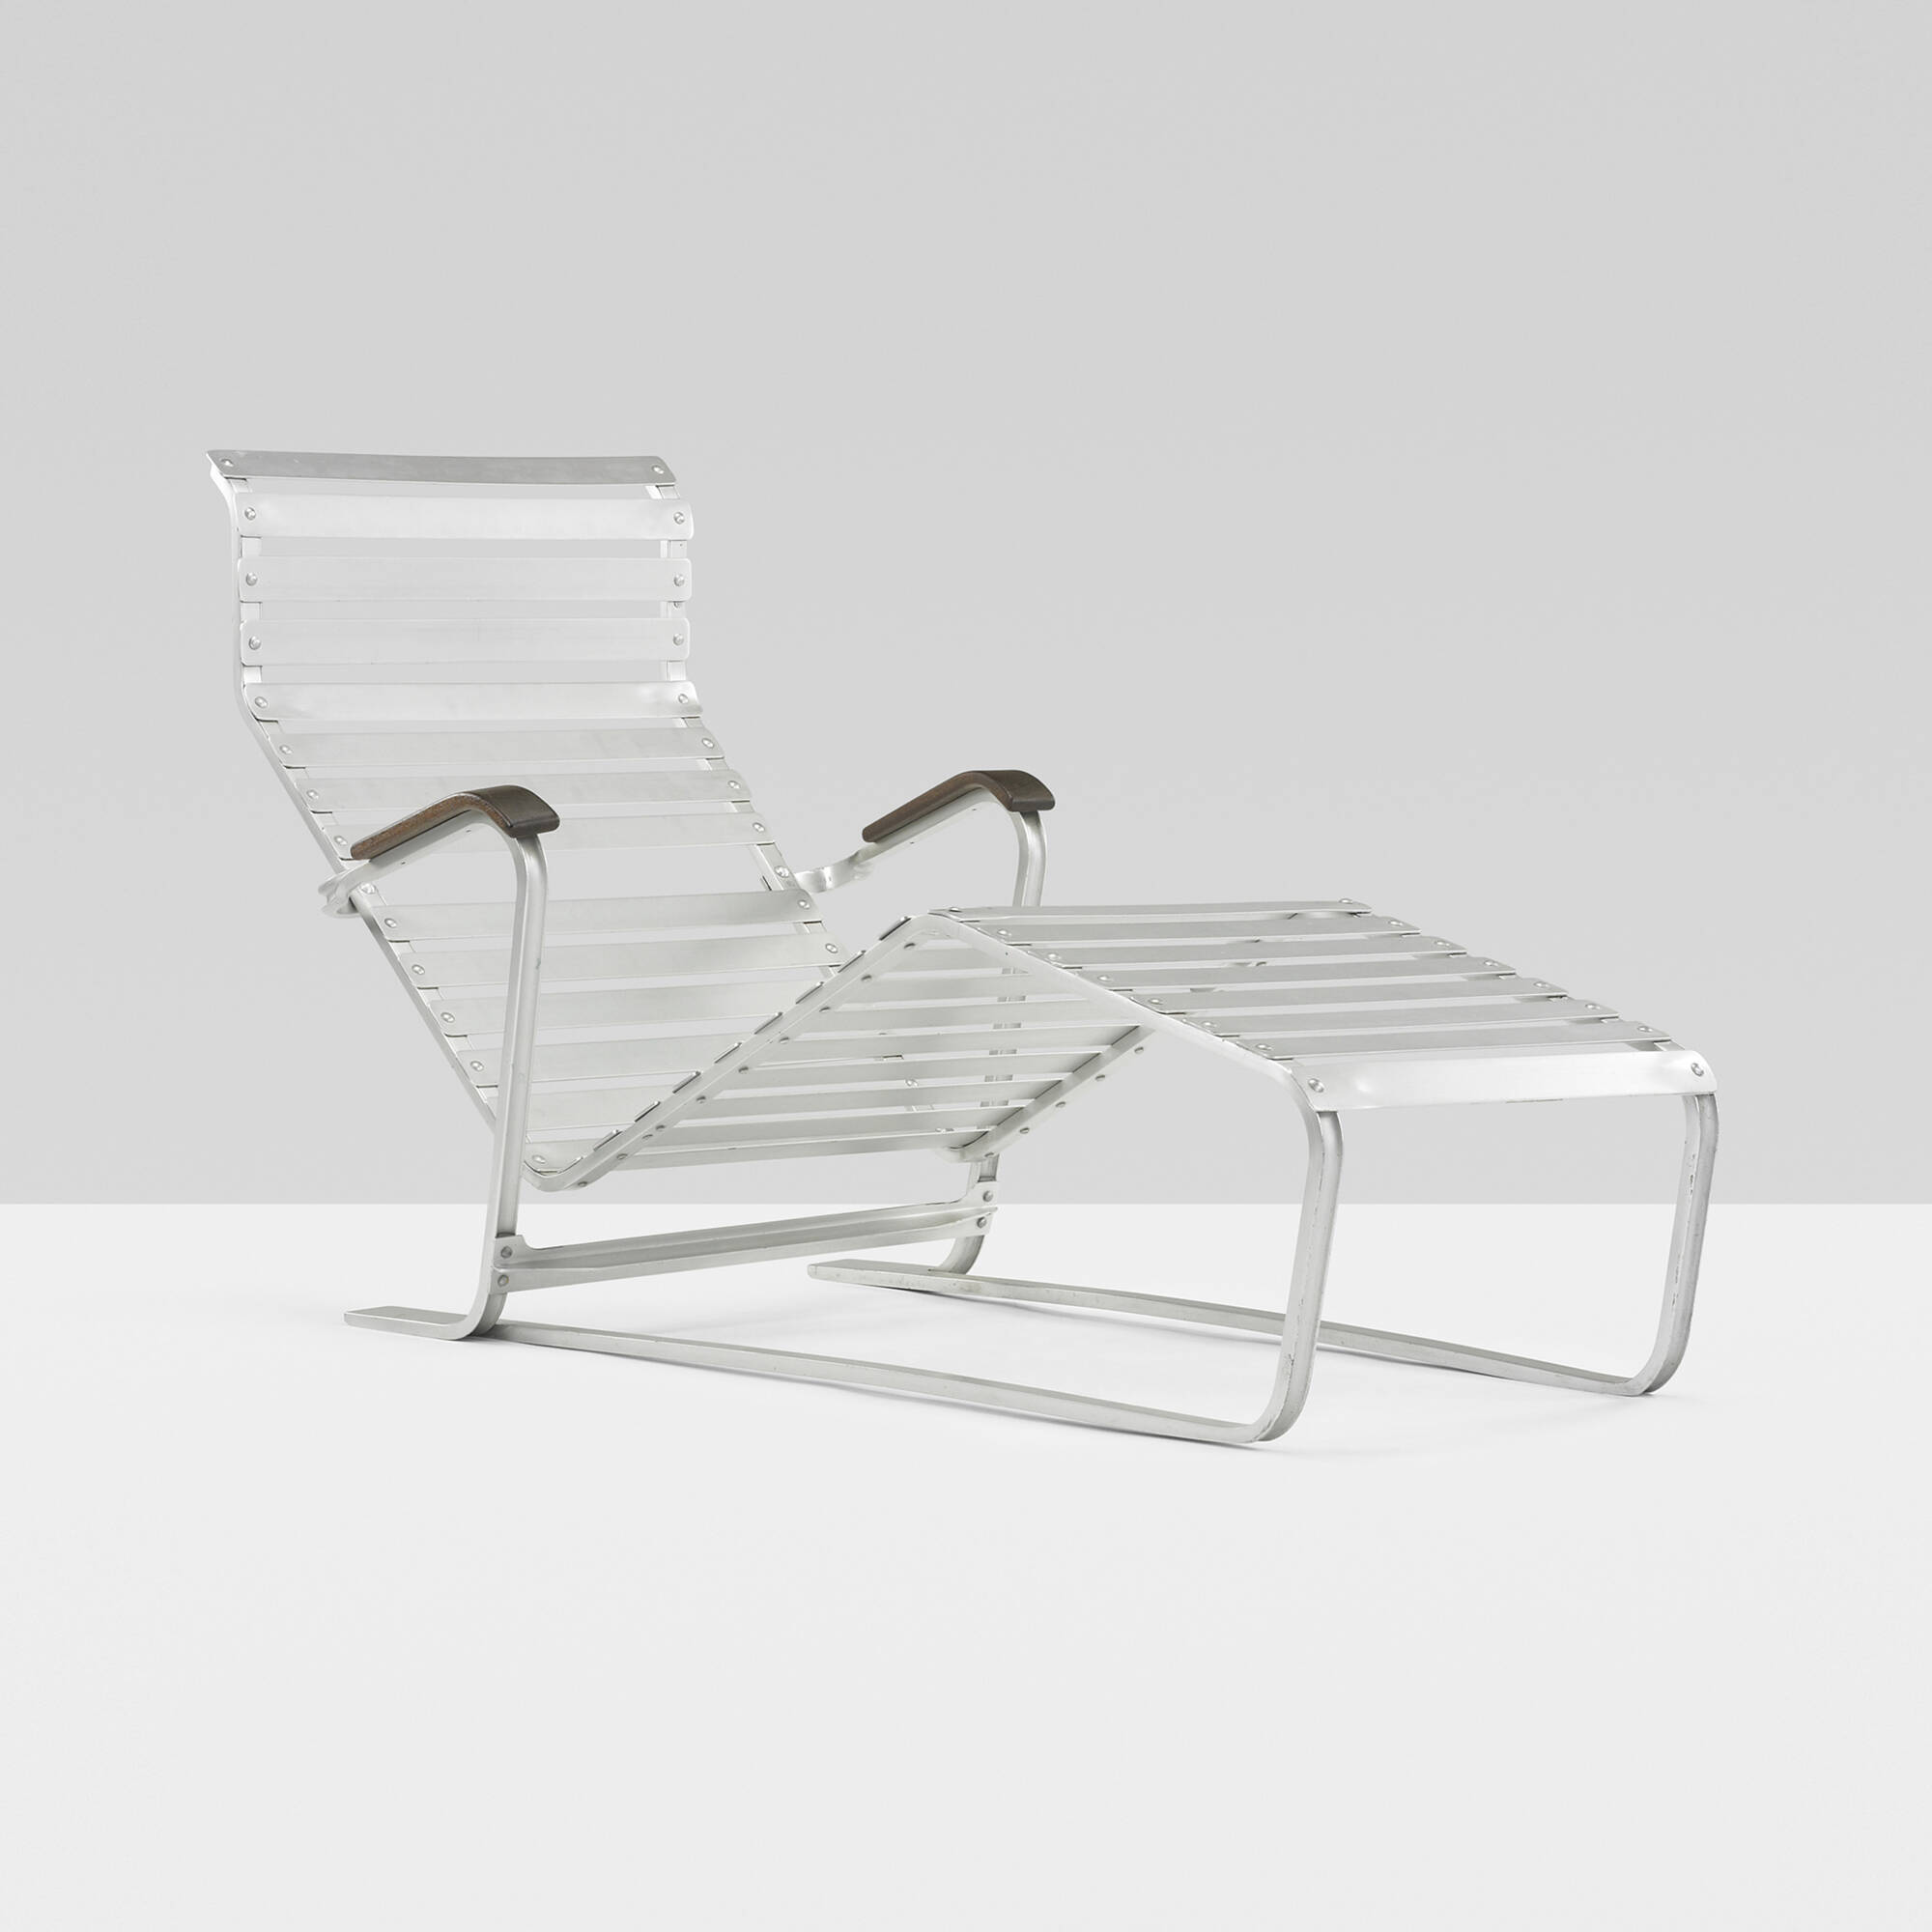 282: MARCEL BREUER, chaise lounge, model 313 < Important Design 